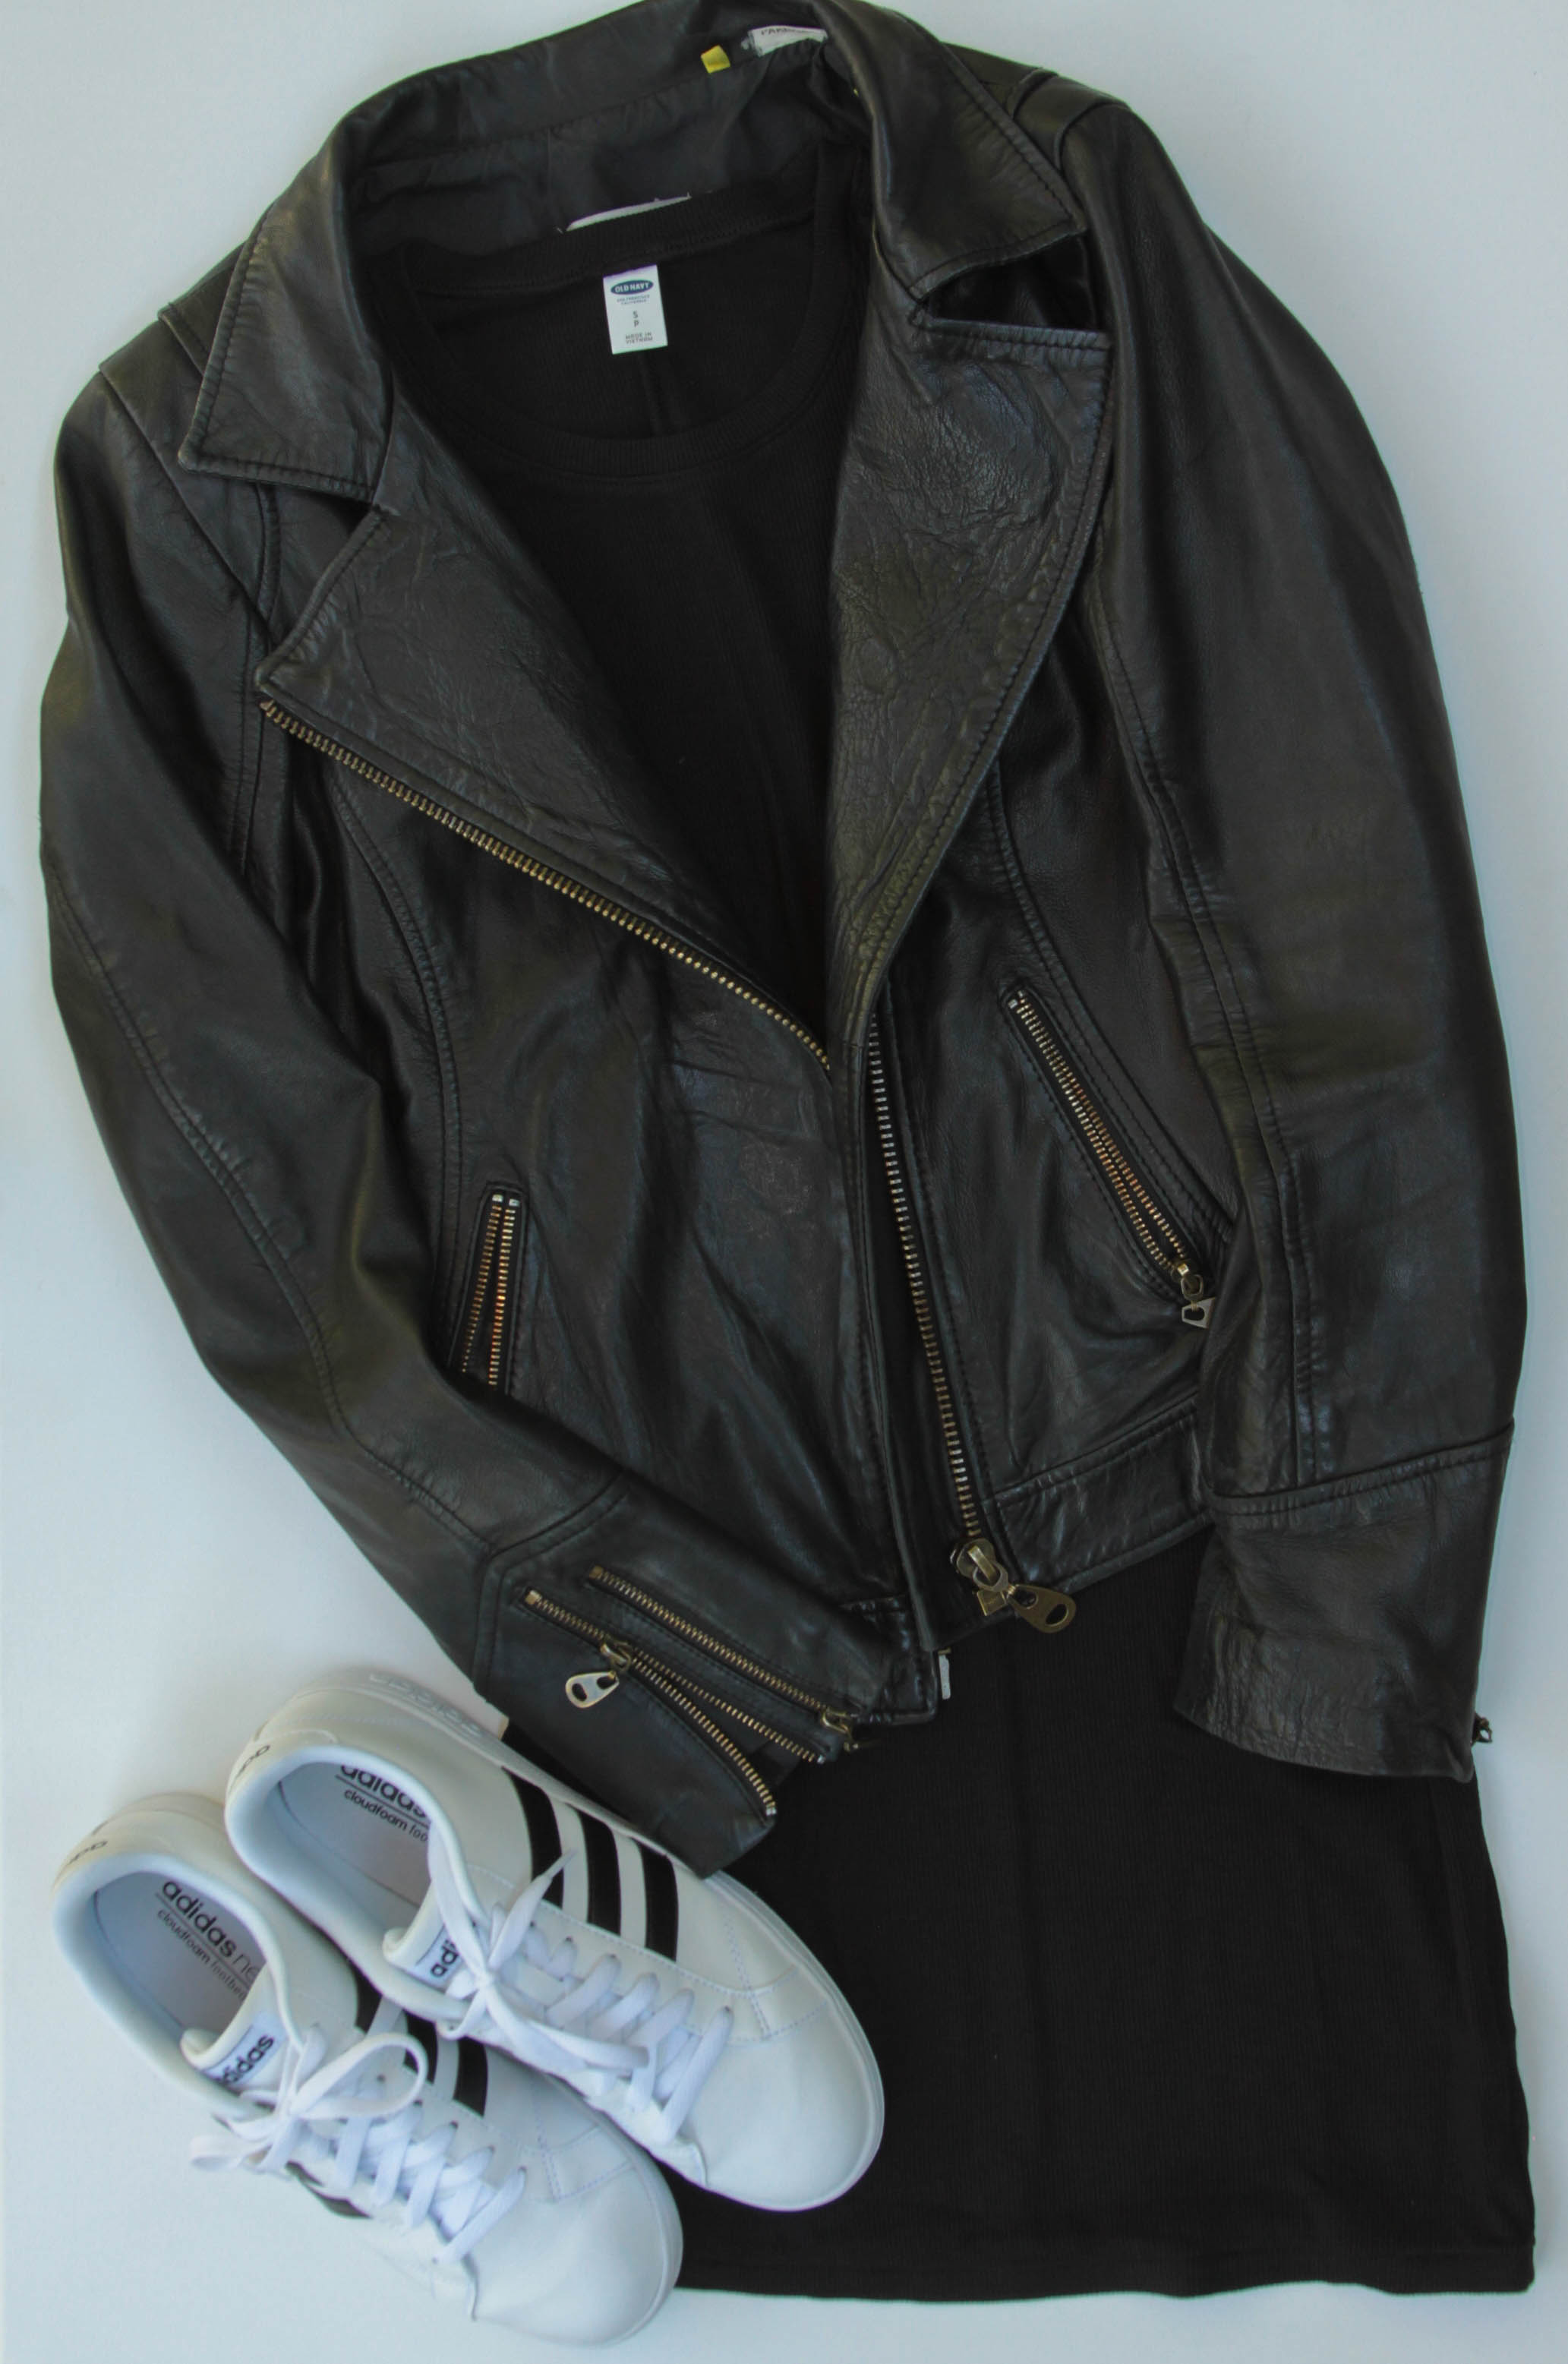   Doma Leather Jacket  |  Old Navy Black Dress  |  Adidas   